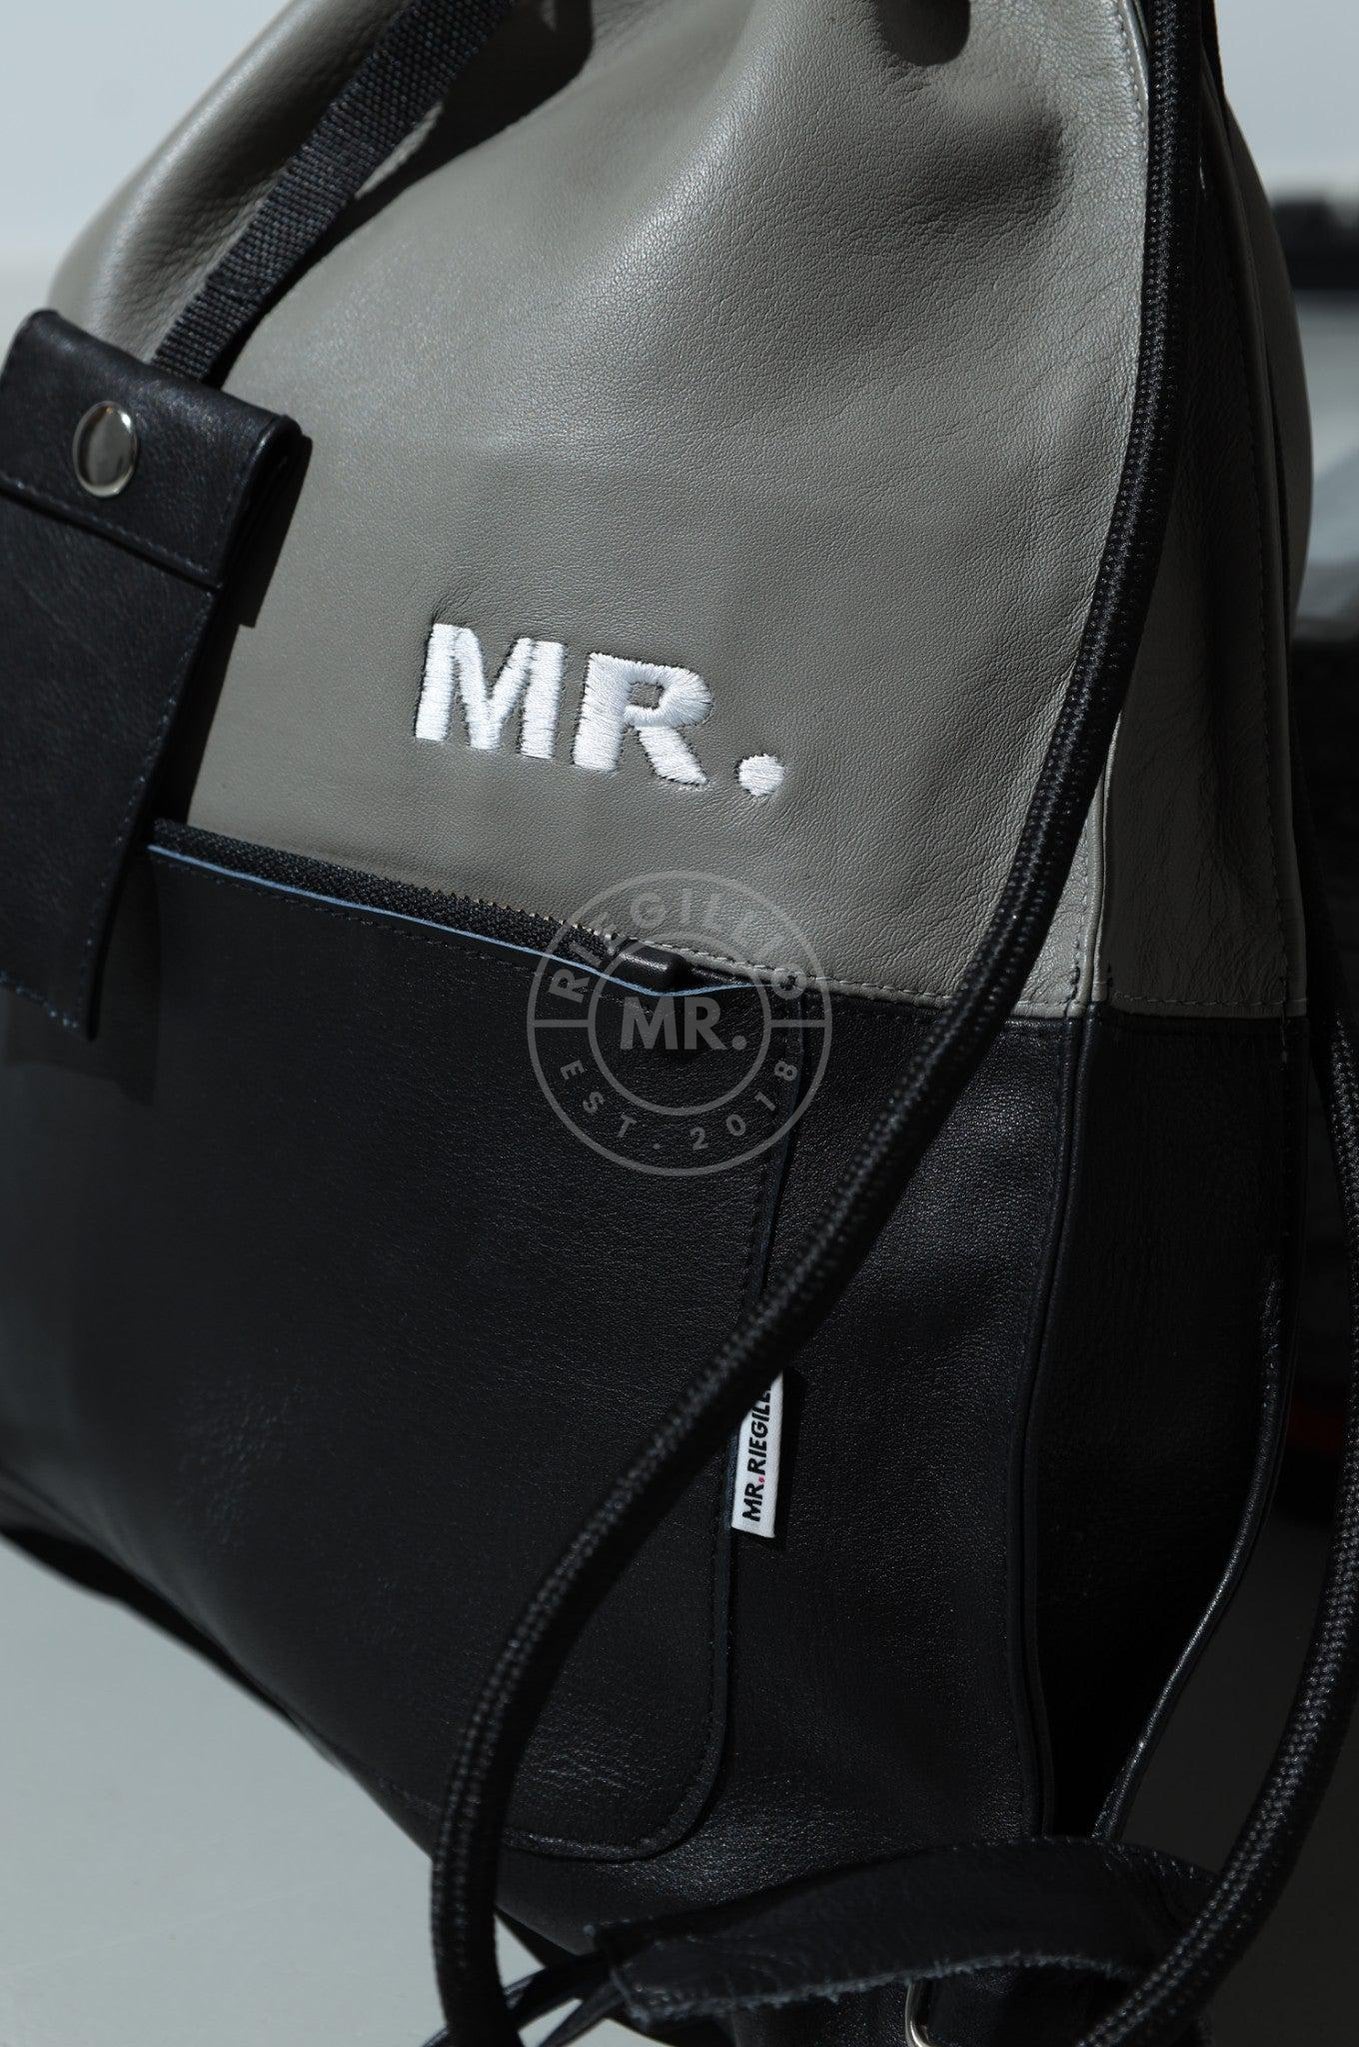 Leather Backpack Black - Grey at MR. Riegillio